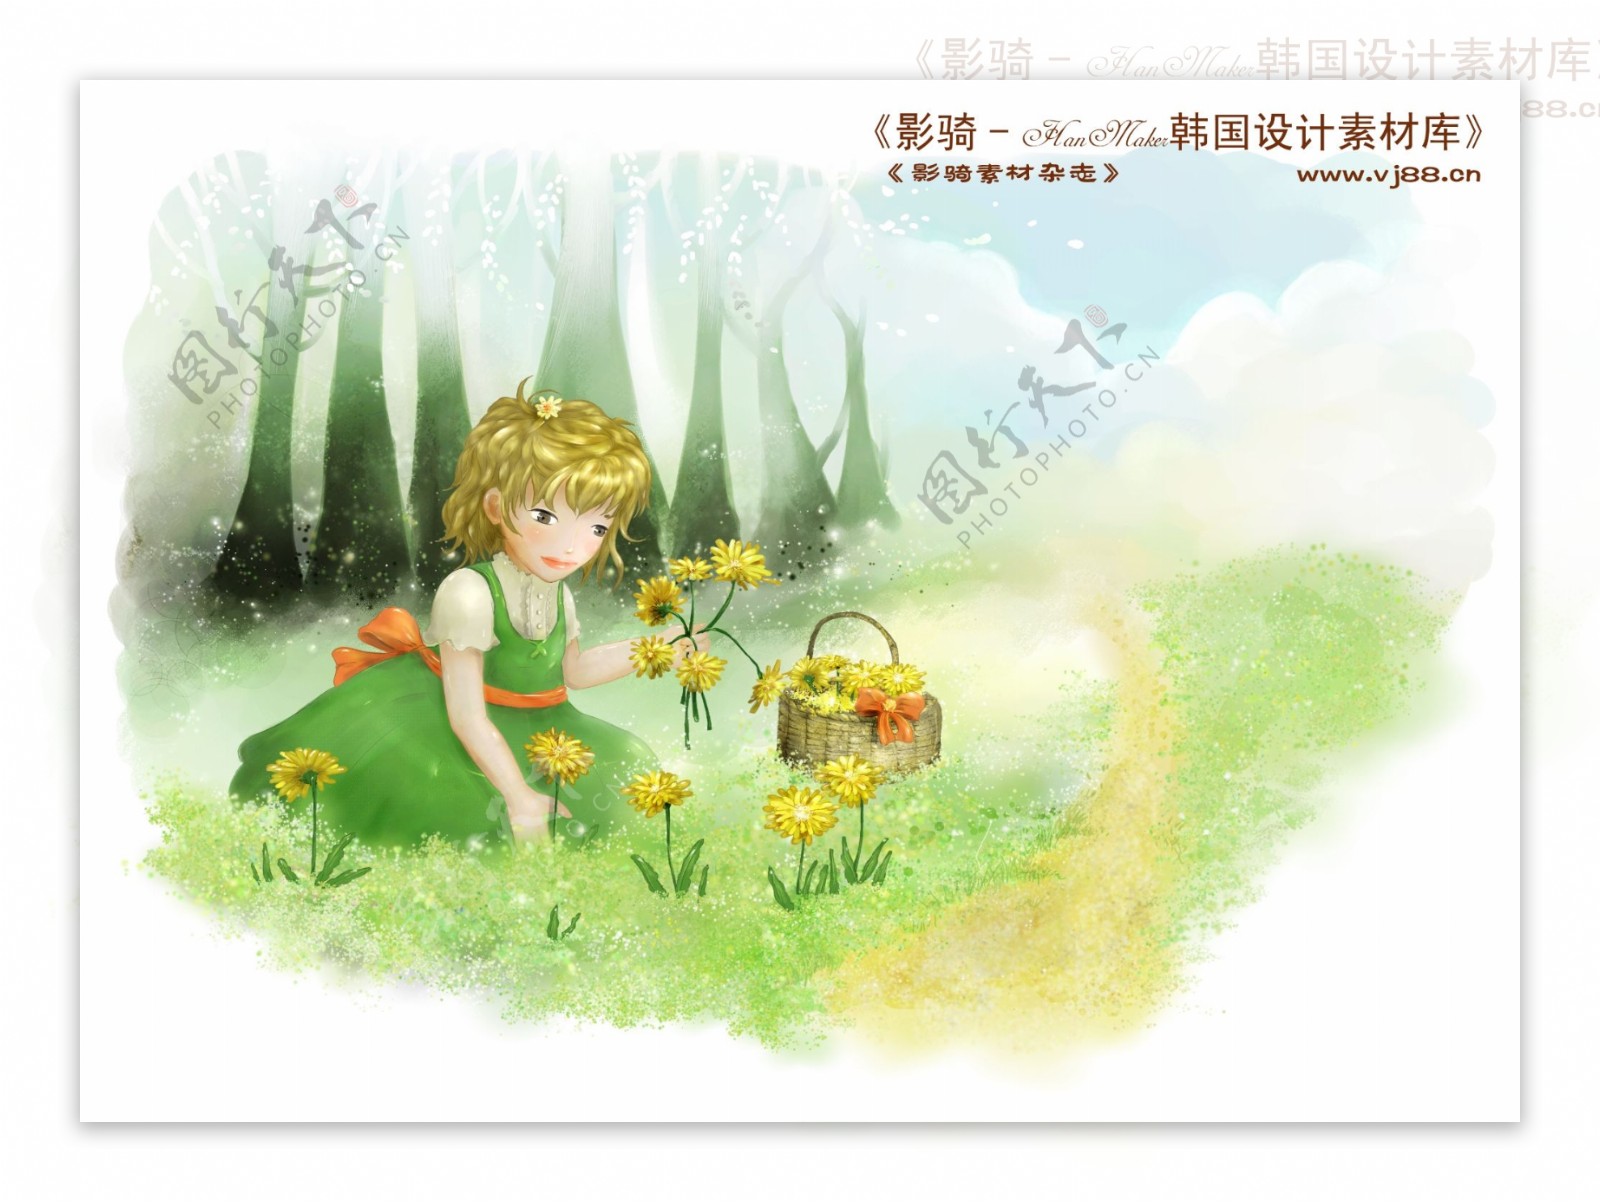 HanMaker韩国设计素材库背景卡通漫画人物精美风景草地花朵树林